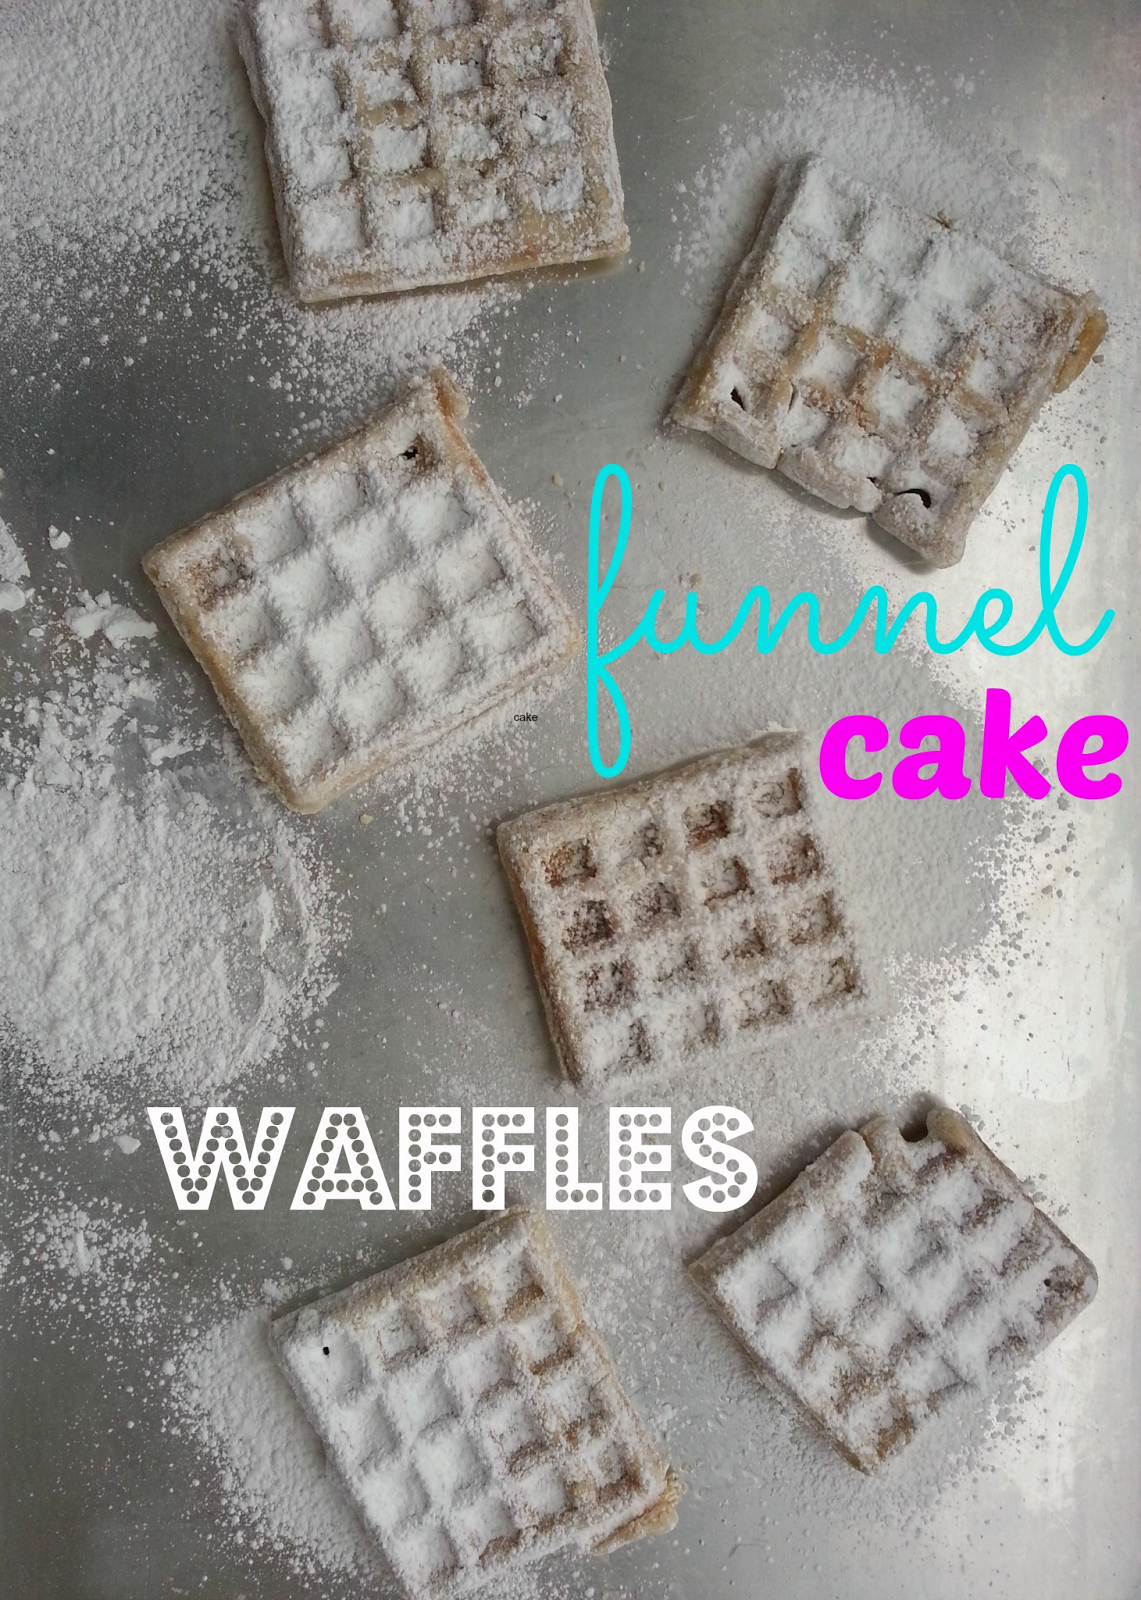 Funnel Cake Waffles